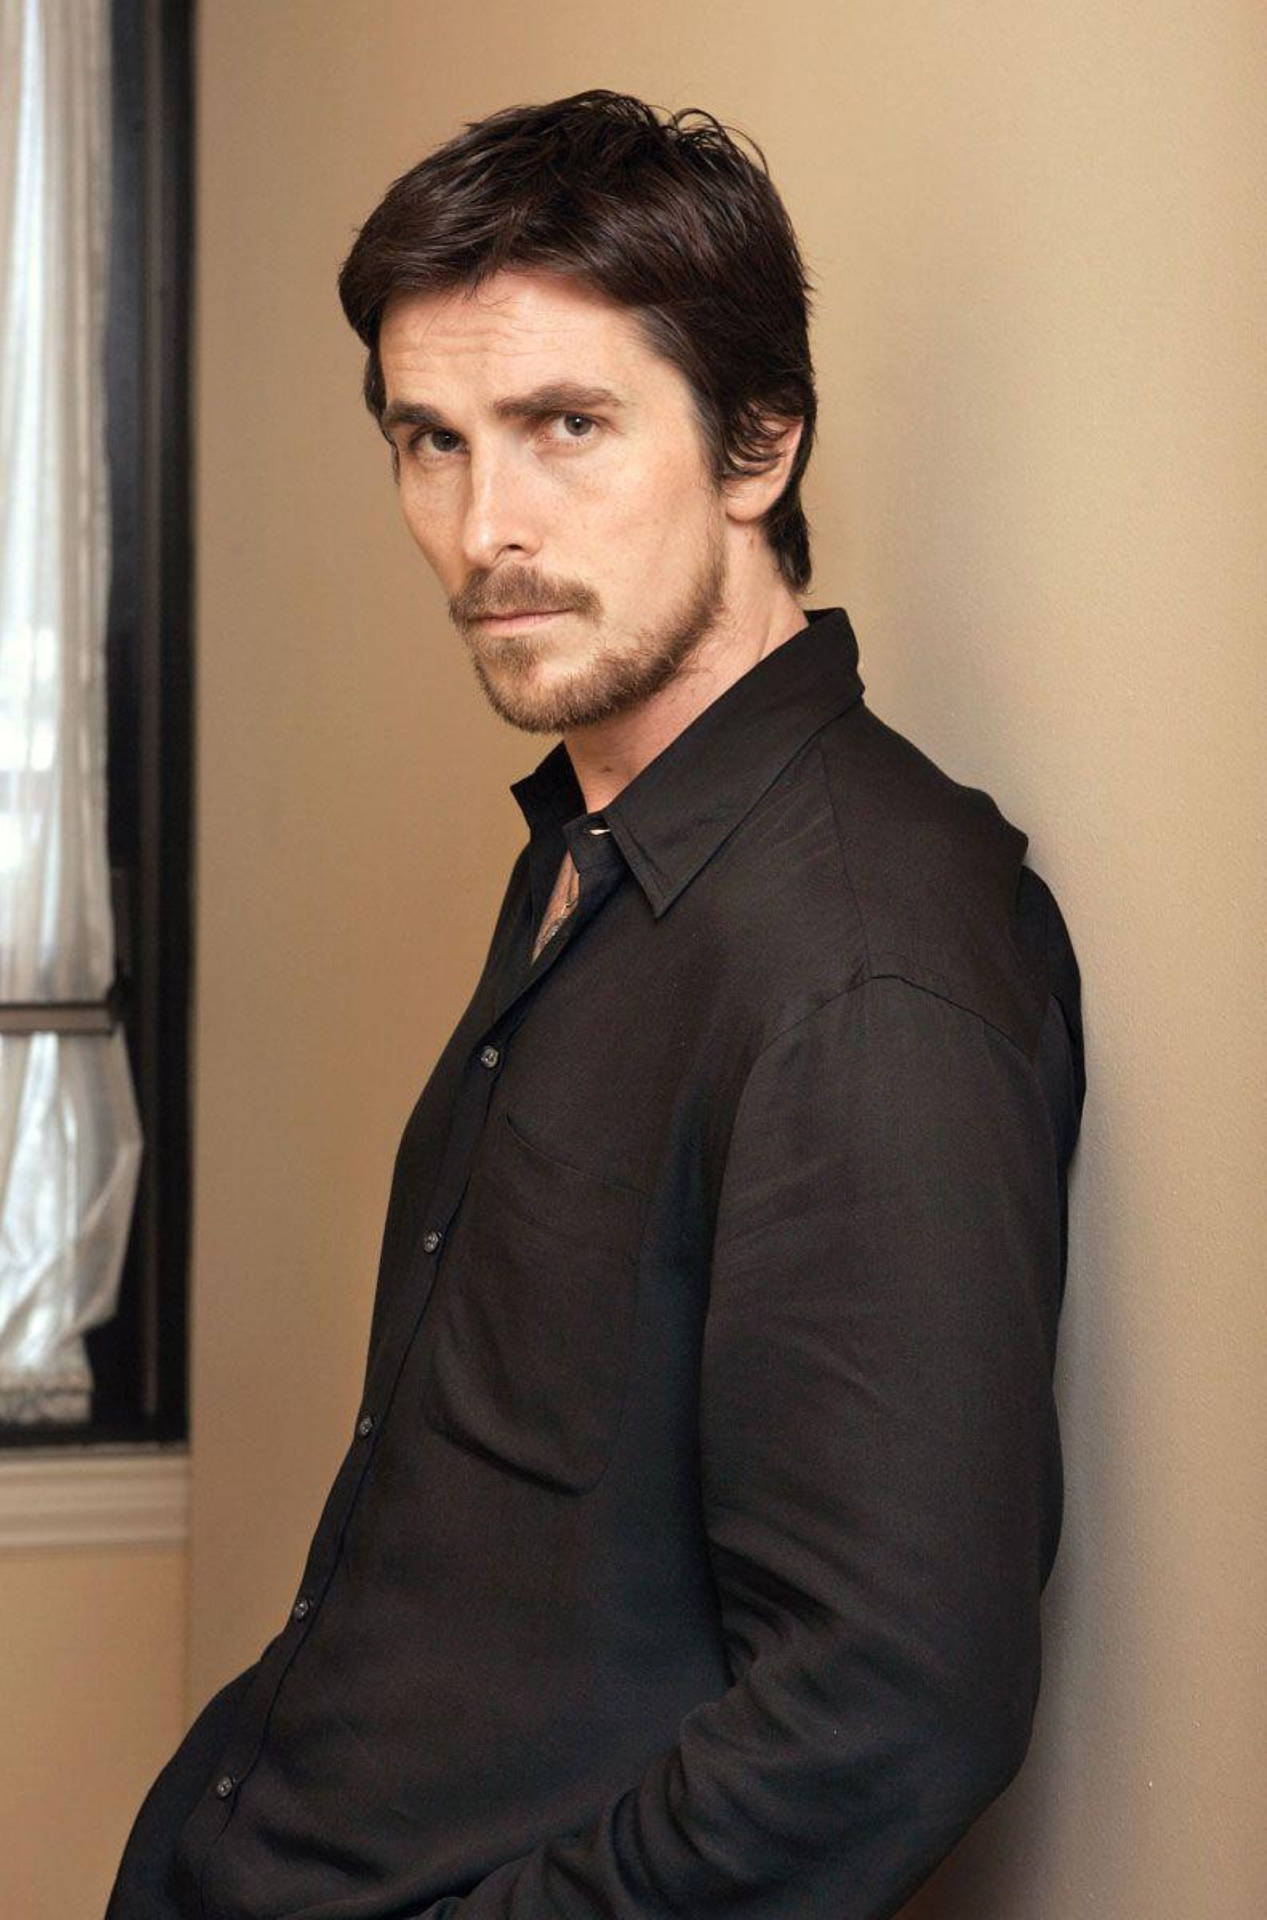 Christian Bale Portrait Background